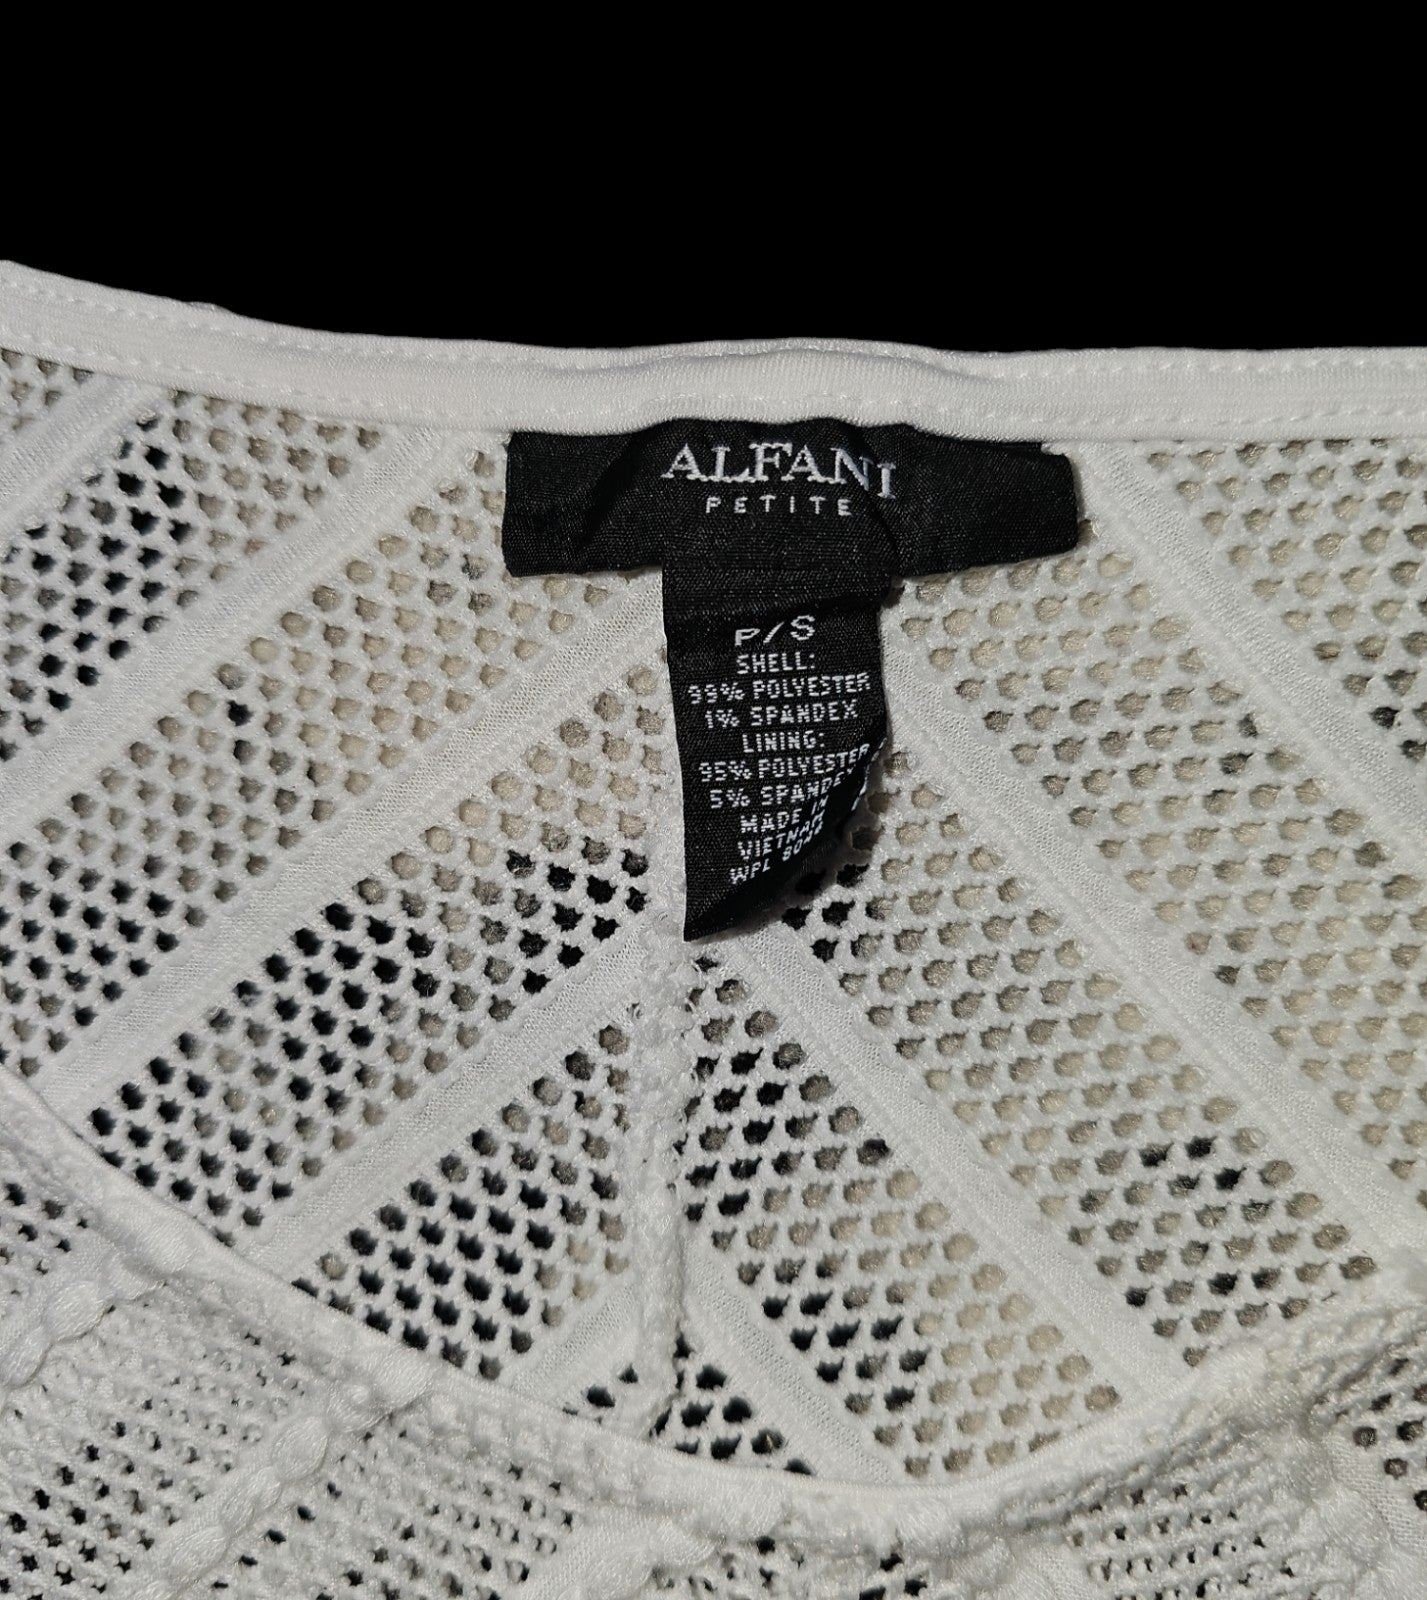 Exclusive Alfani Petite White Knit Sweater size p/s IMVrGfvsC Hot Sale